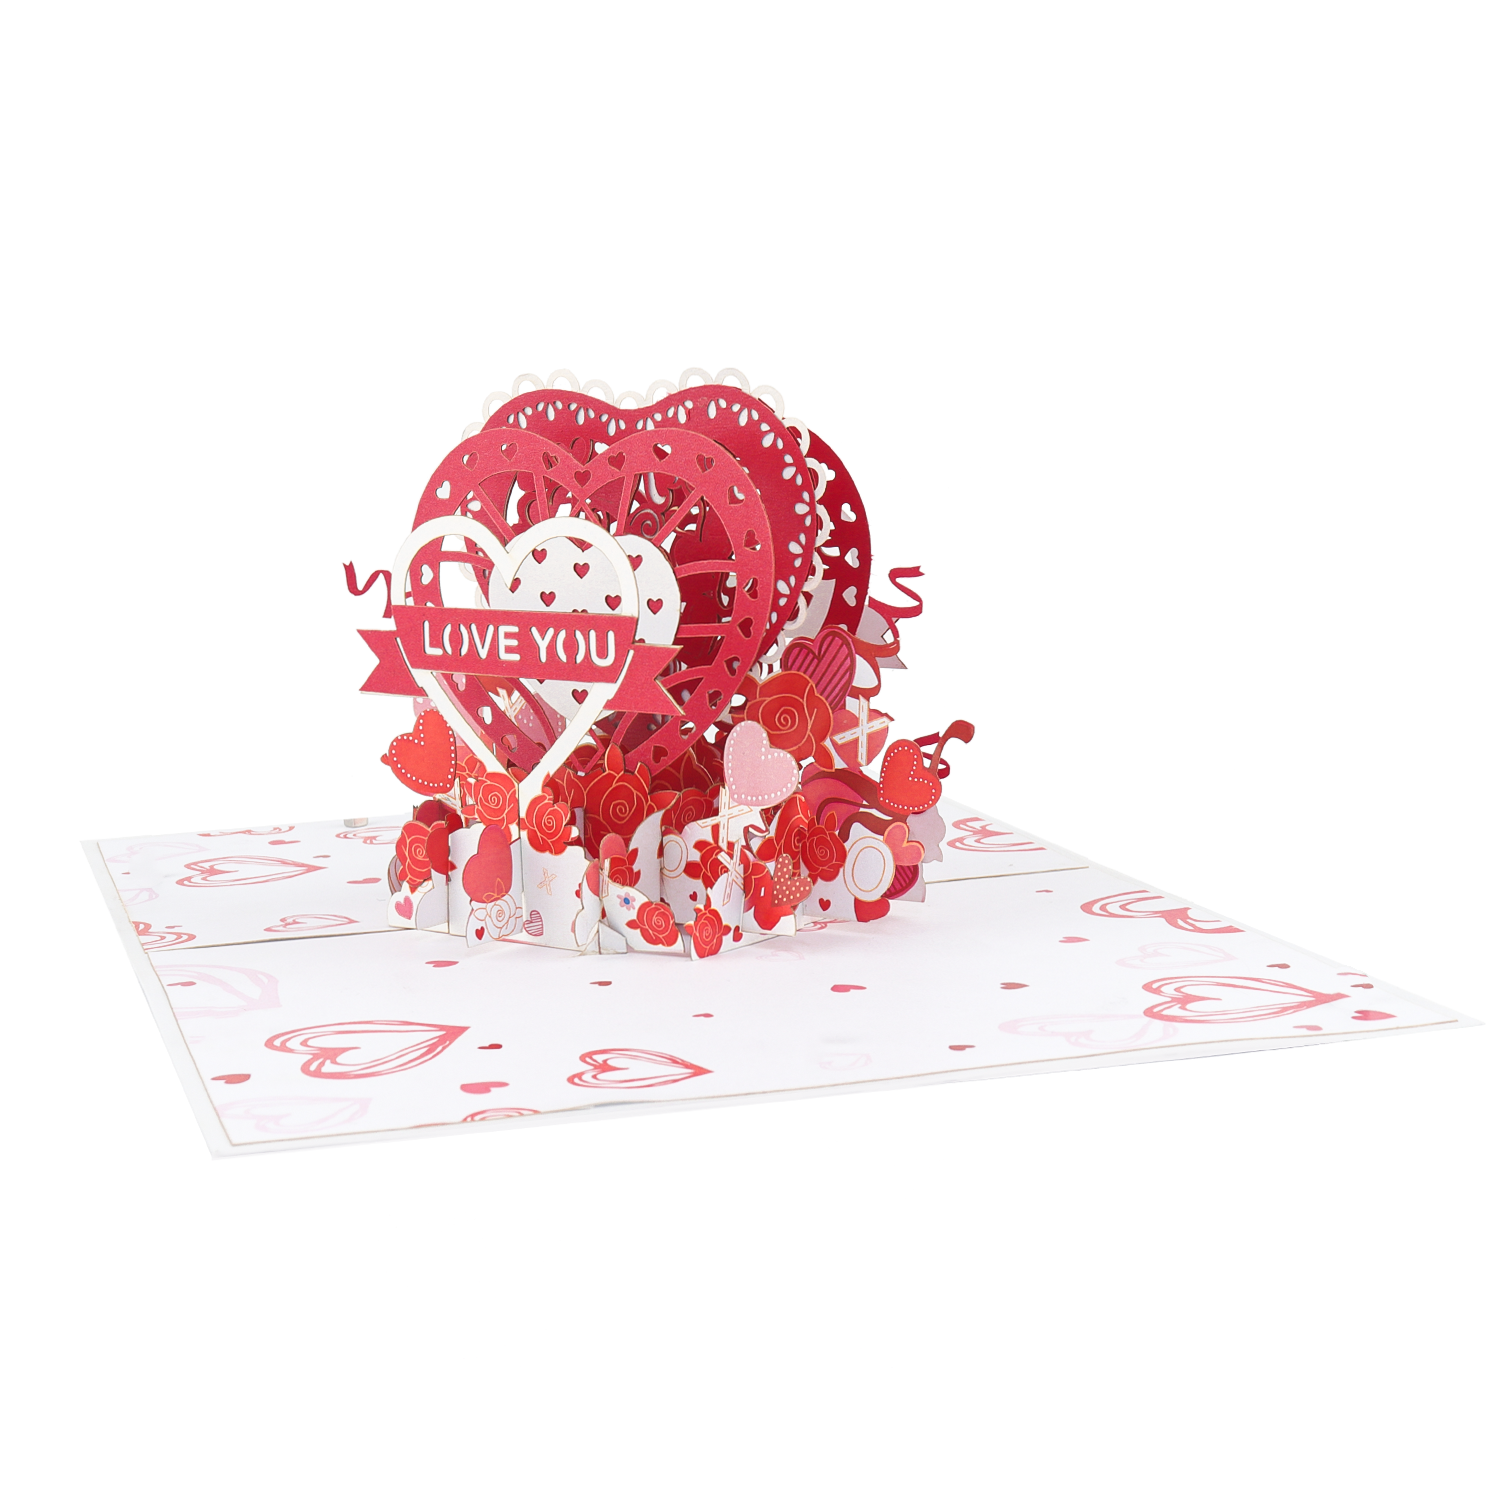 Love-Heart-Pop-Up-Card-LV65-overview-pop-up-card-wholesale-manufacturer-valentines-day-pop-up-card-flower-pop-up-card-teddy-3d-pop-up-greeting-card-13.png